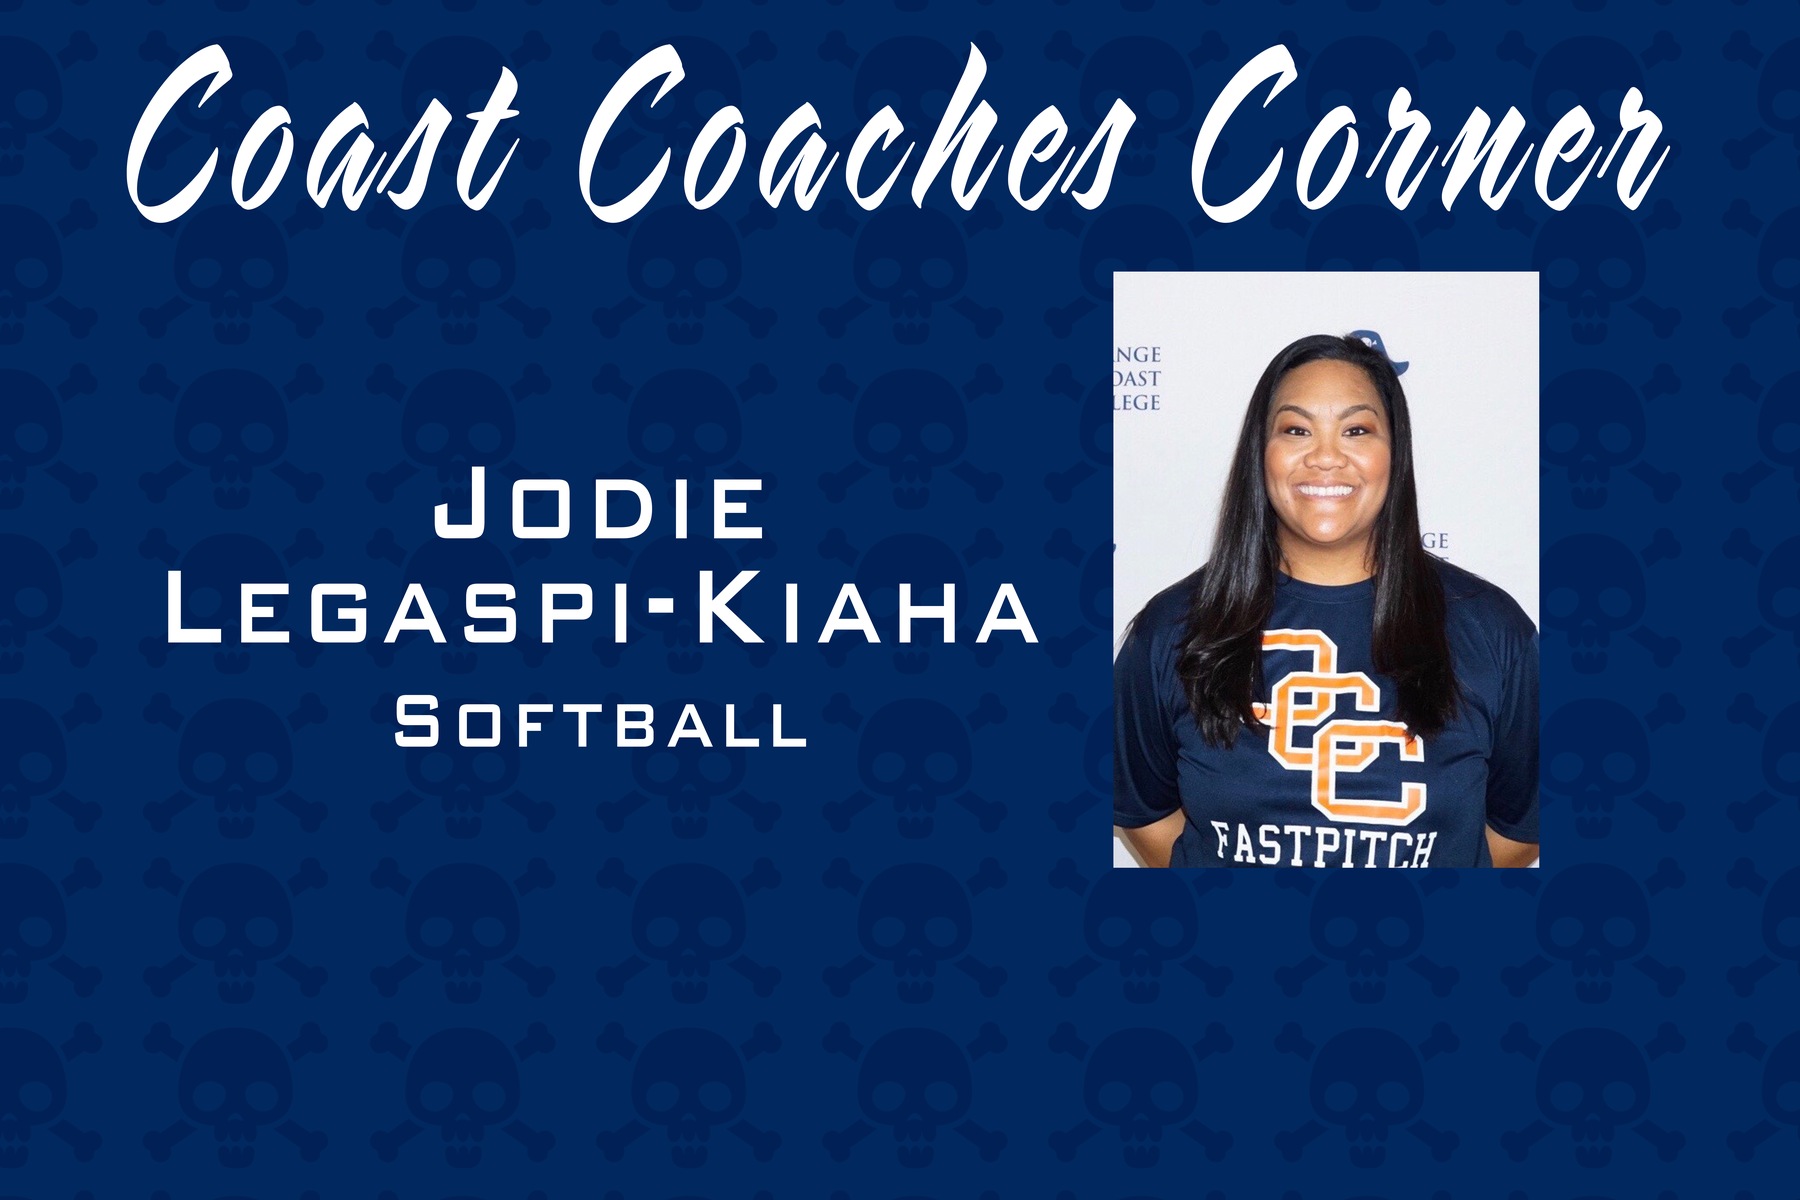 Coast Coaches Corner -- Jodie Legaspi-Kiaha